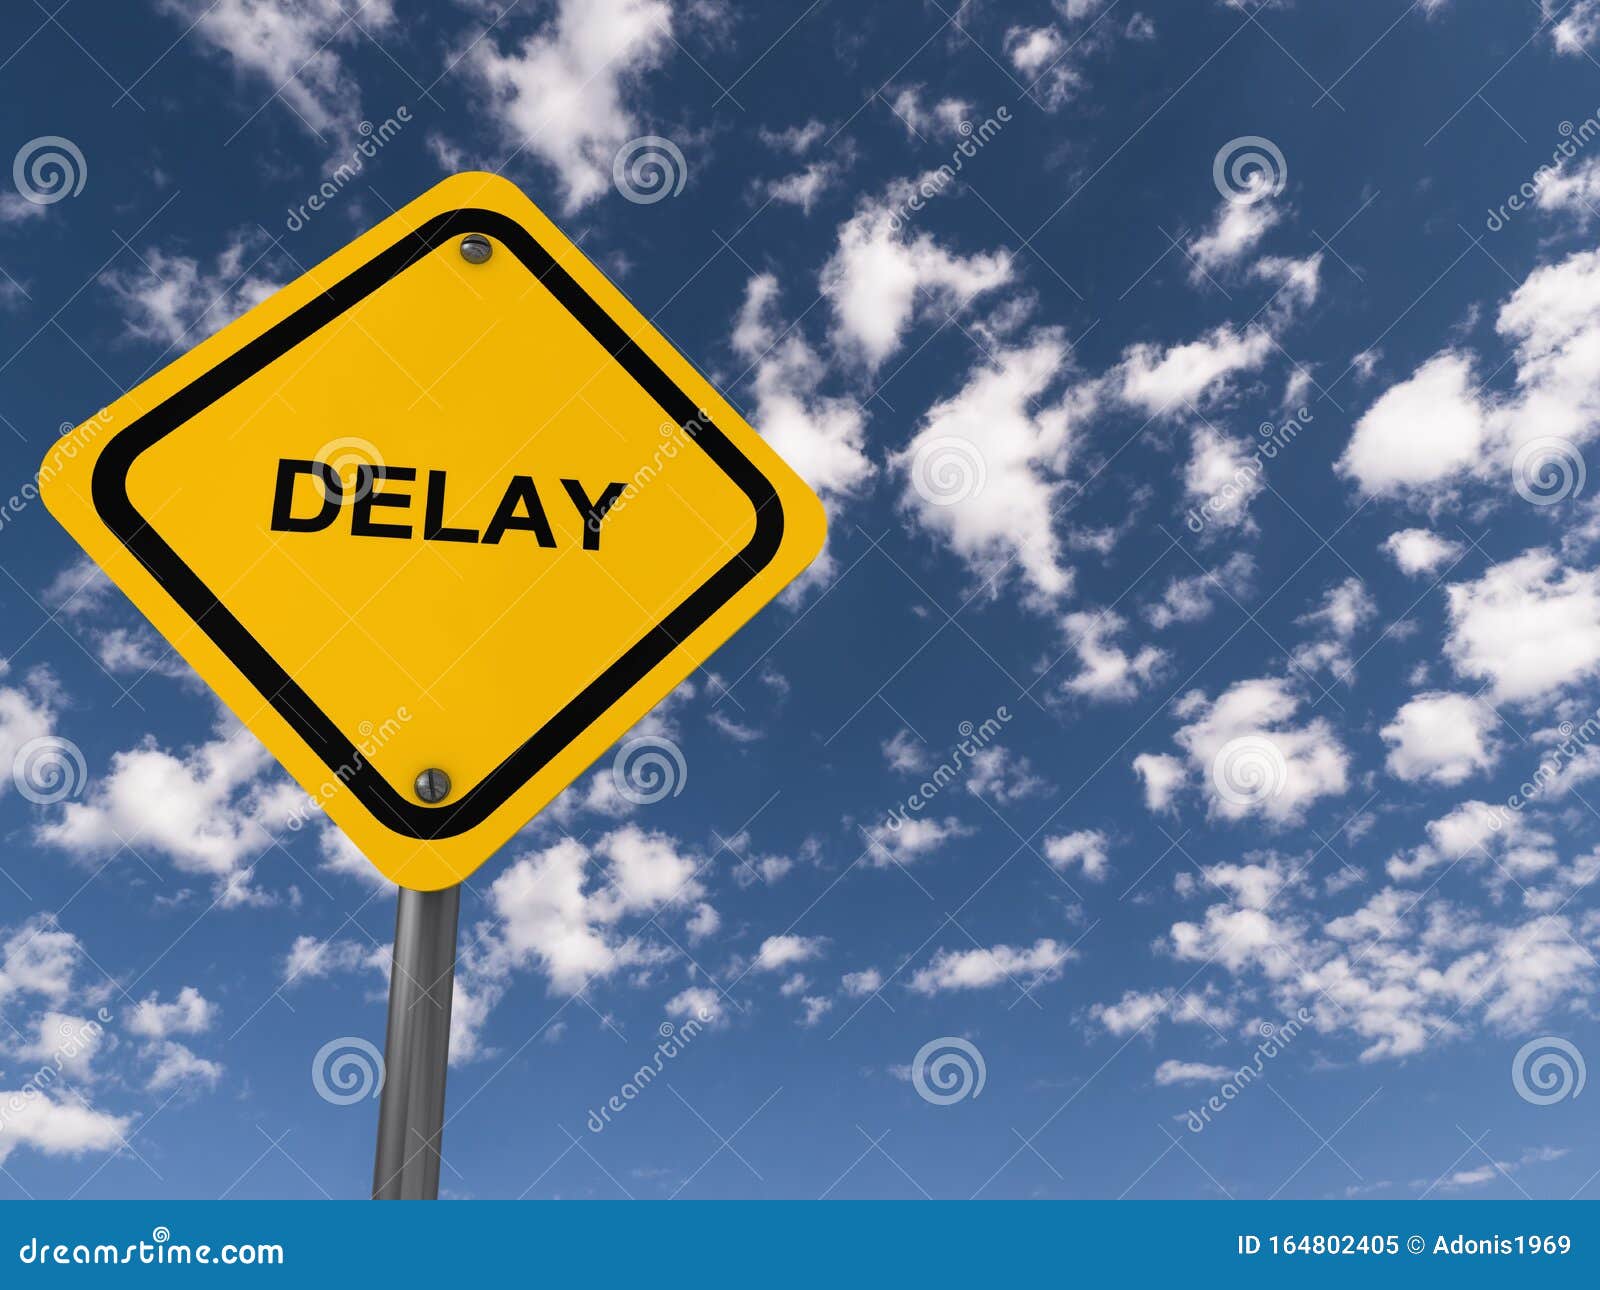 delay traffic sign